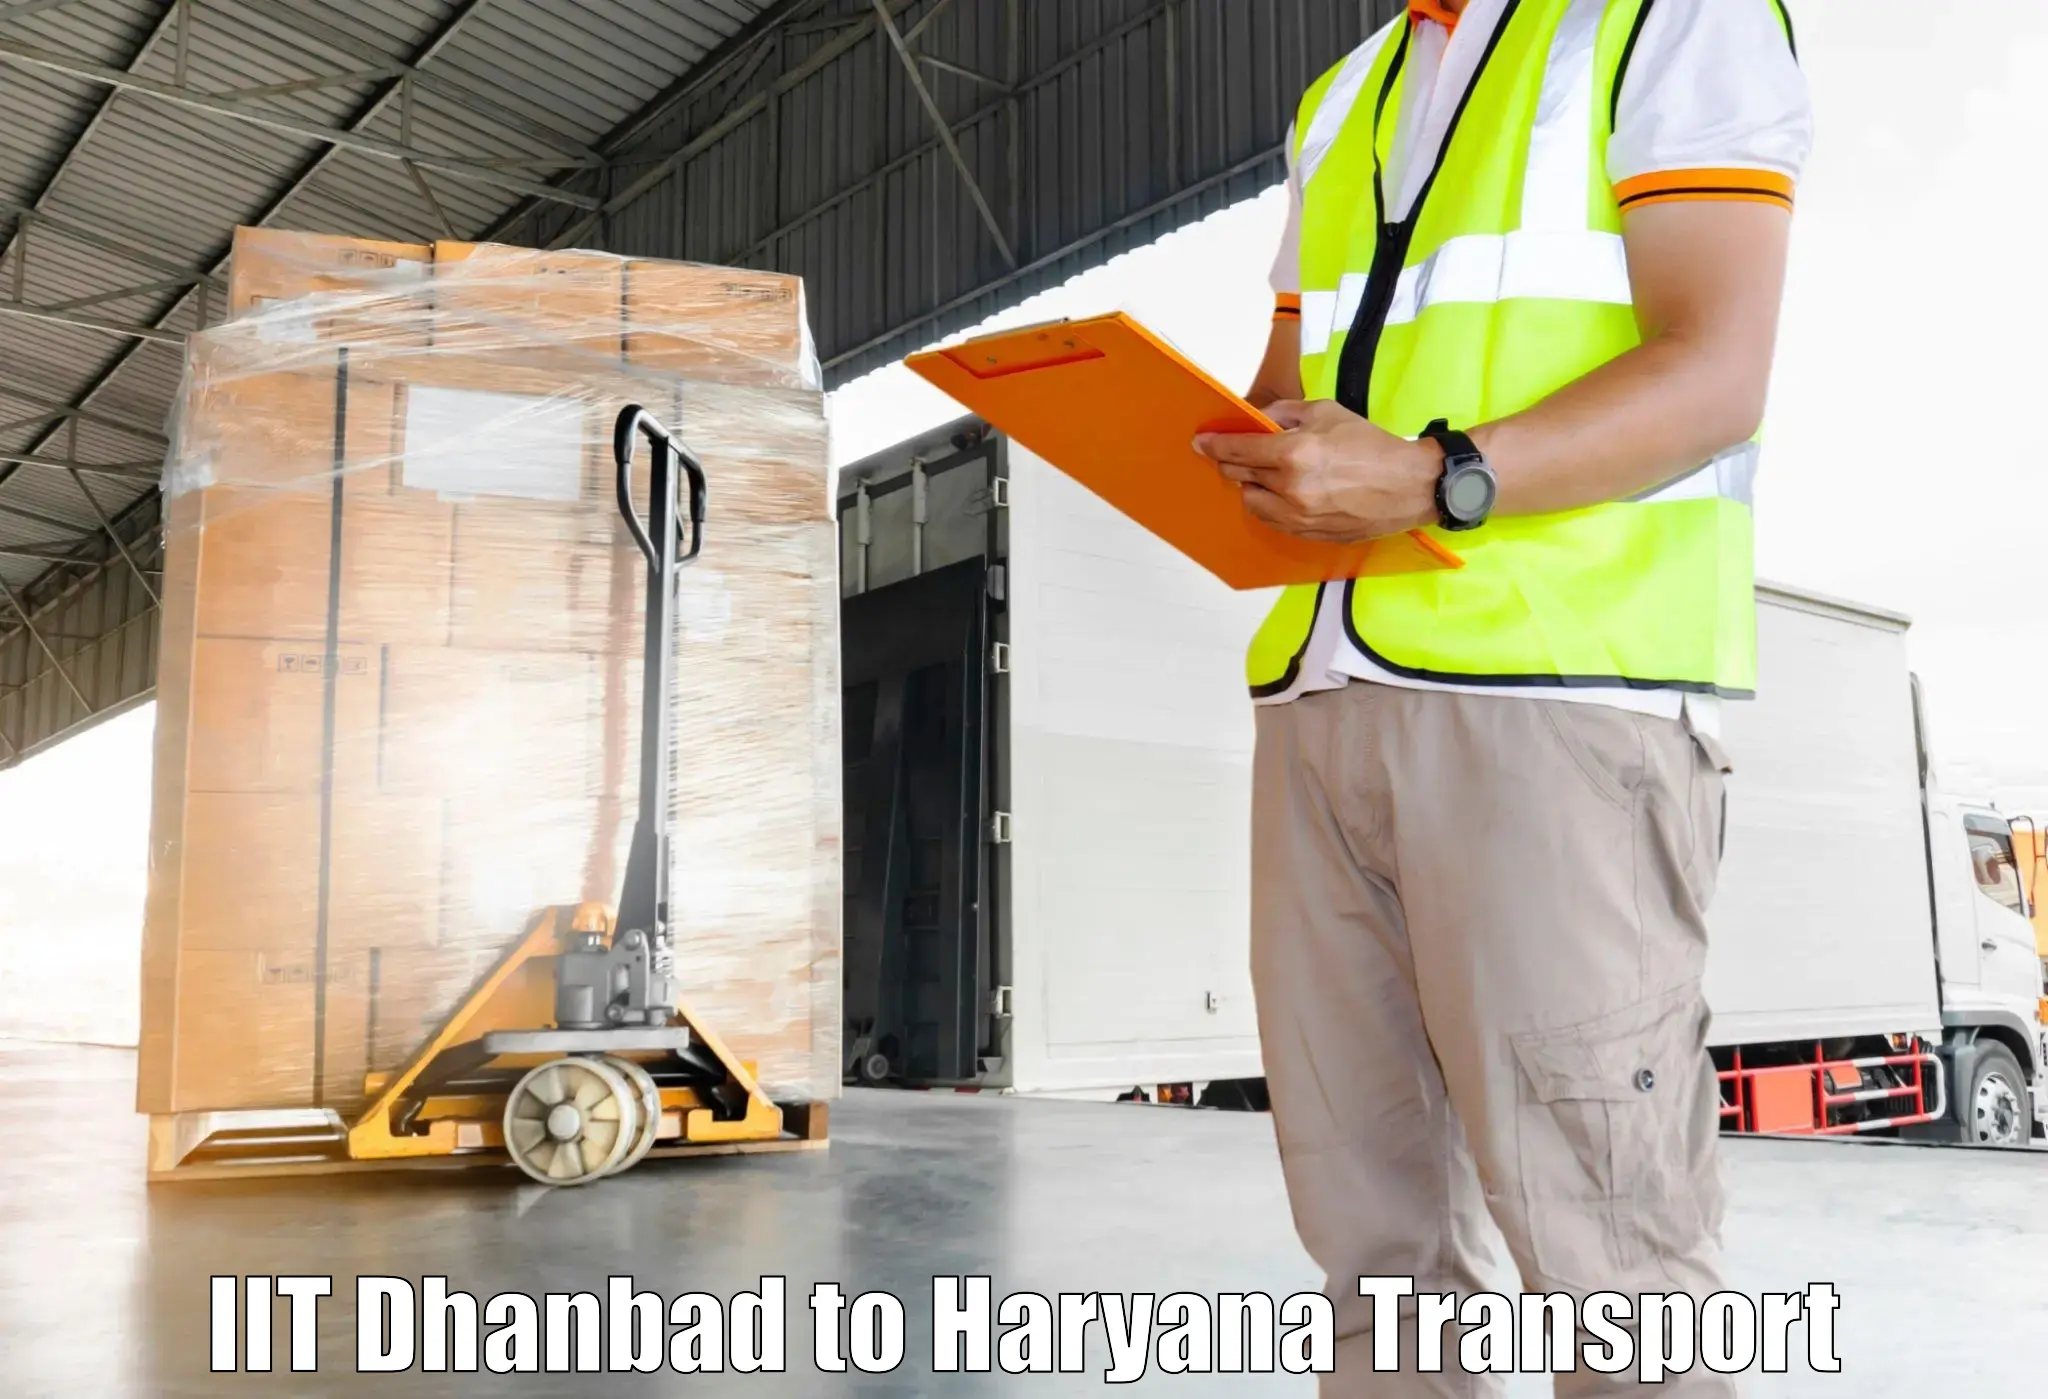 Domestic goods transportation services IIT Dhanbad to Loharu